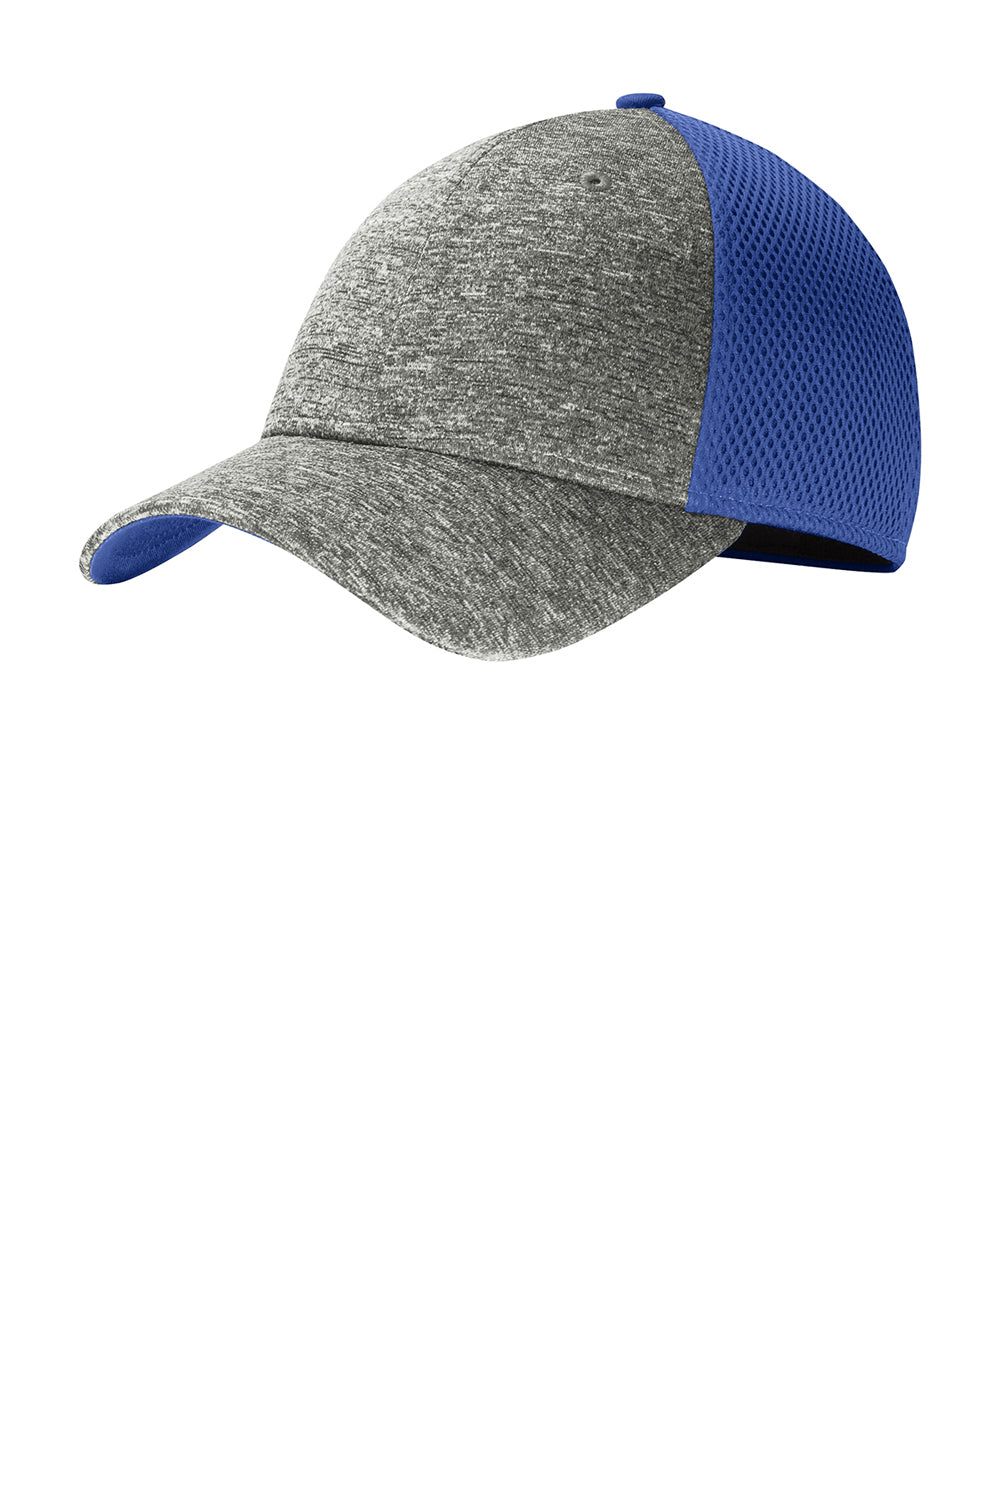 New Era NE702 Mens Stretch Fit Hat Royal Blue/Heather Shadow Grey Front